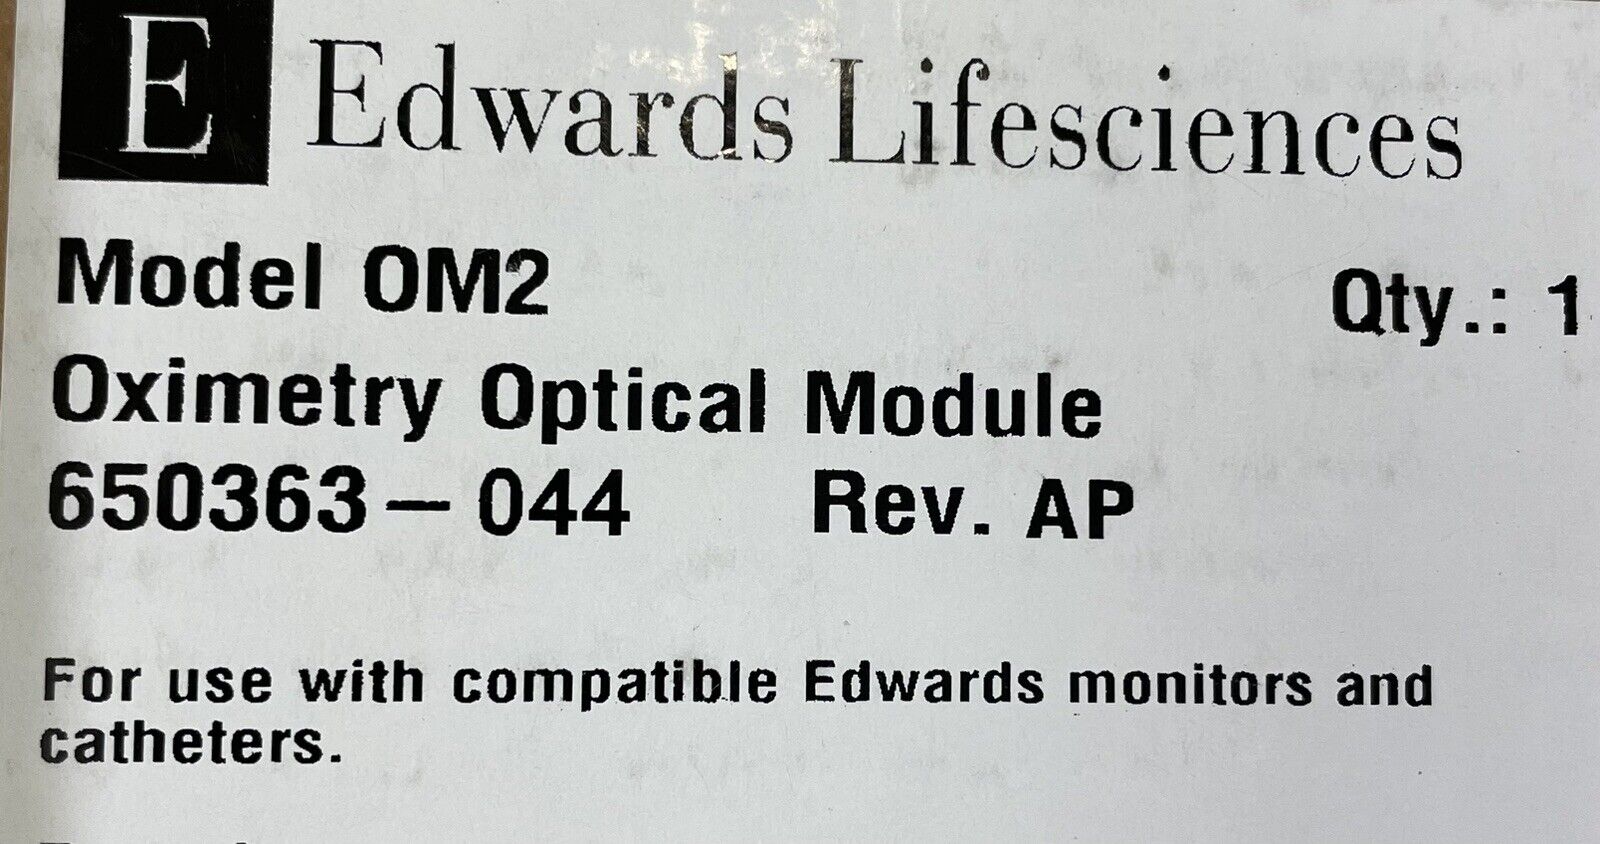 Edwards Lifesciences Oximetry Optical Modules 650363-044 Rev. AP